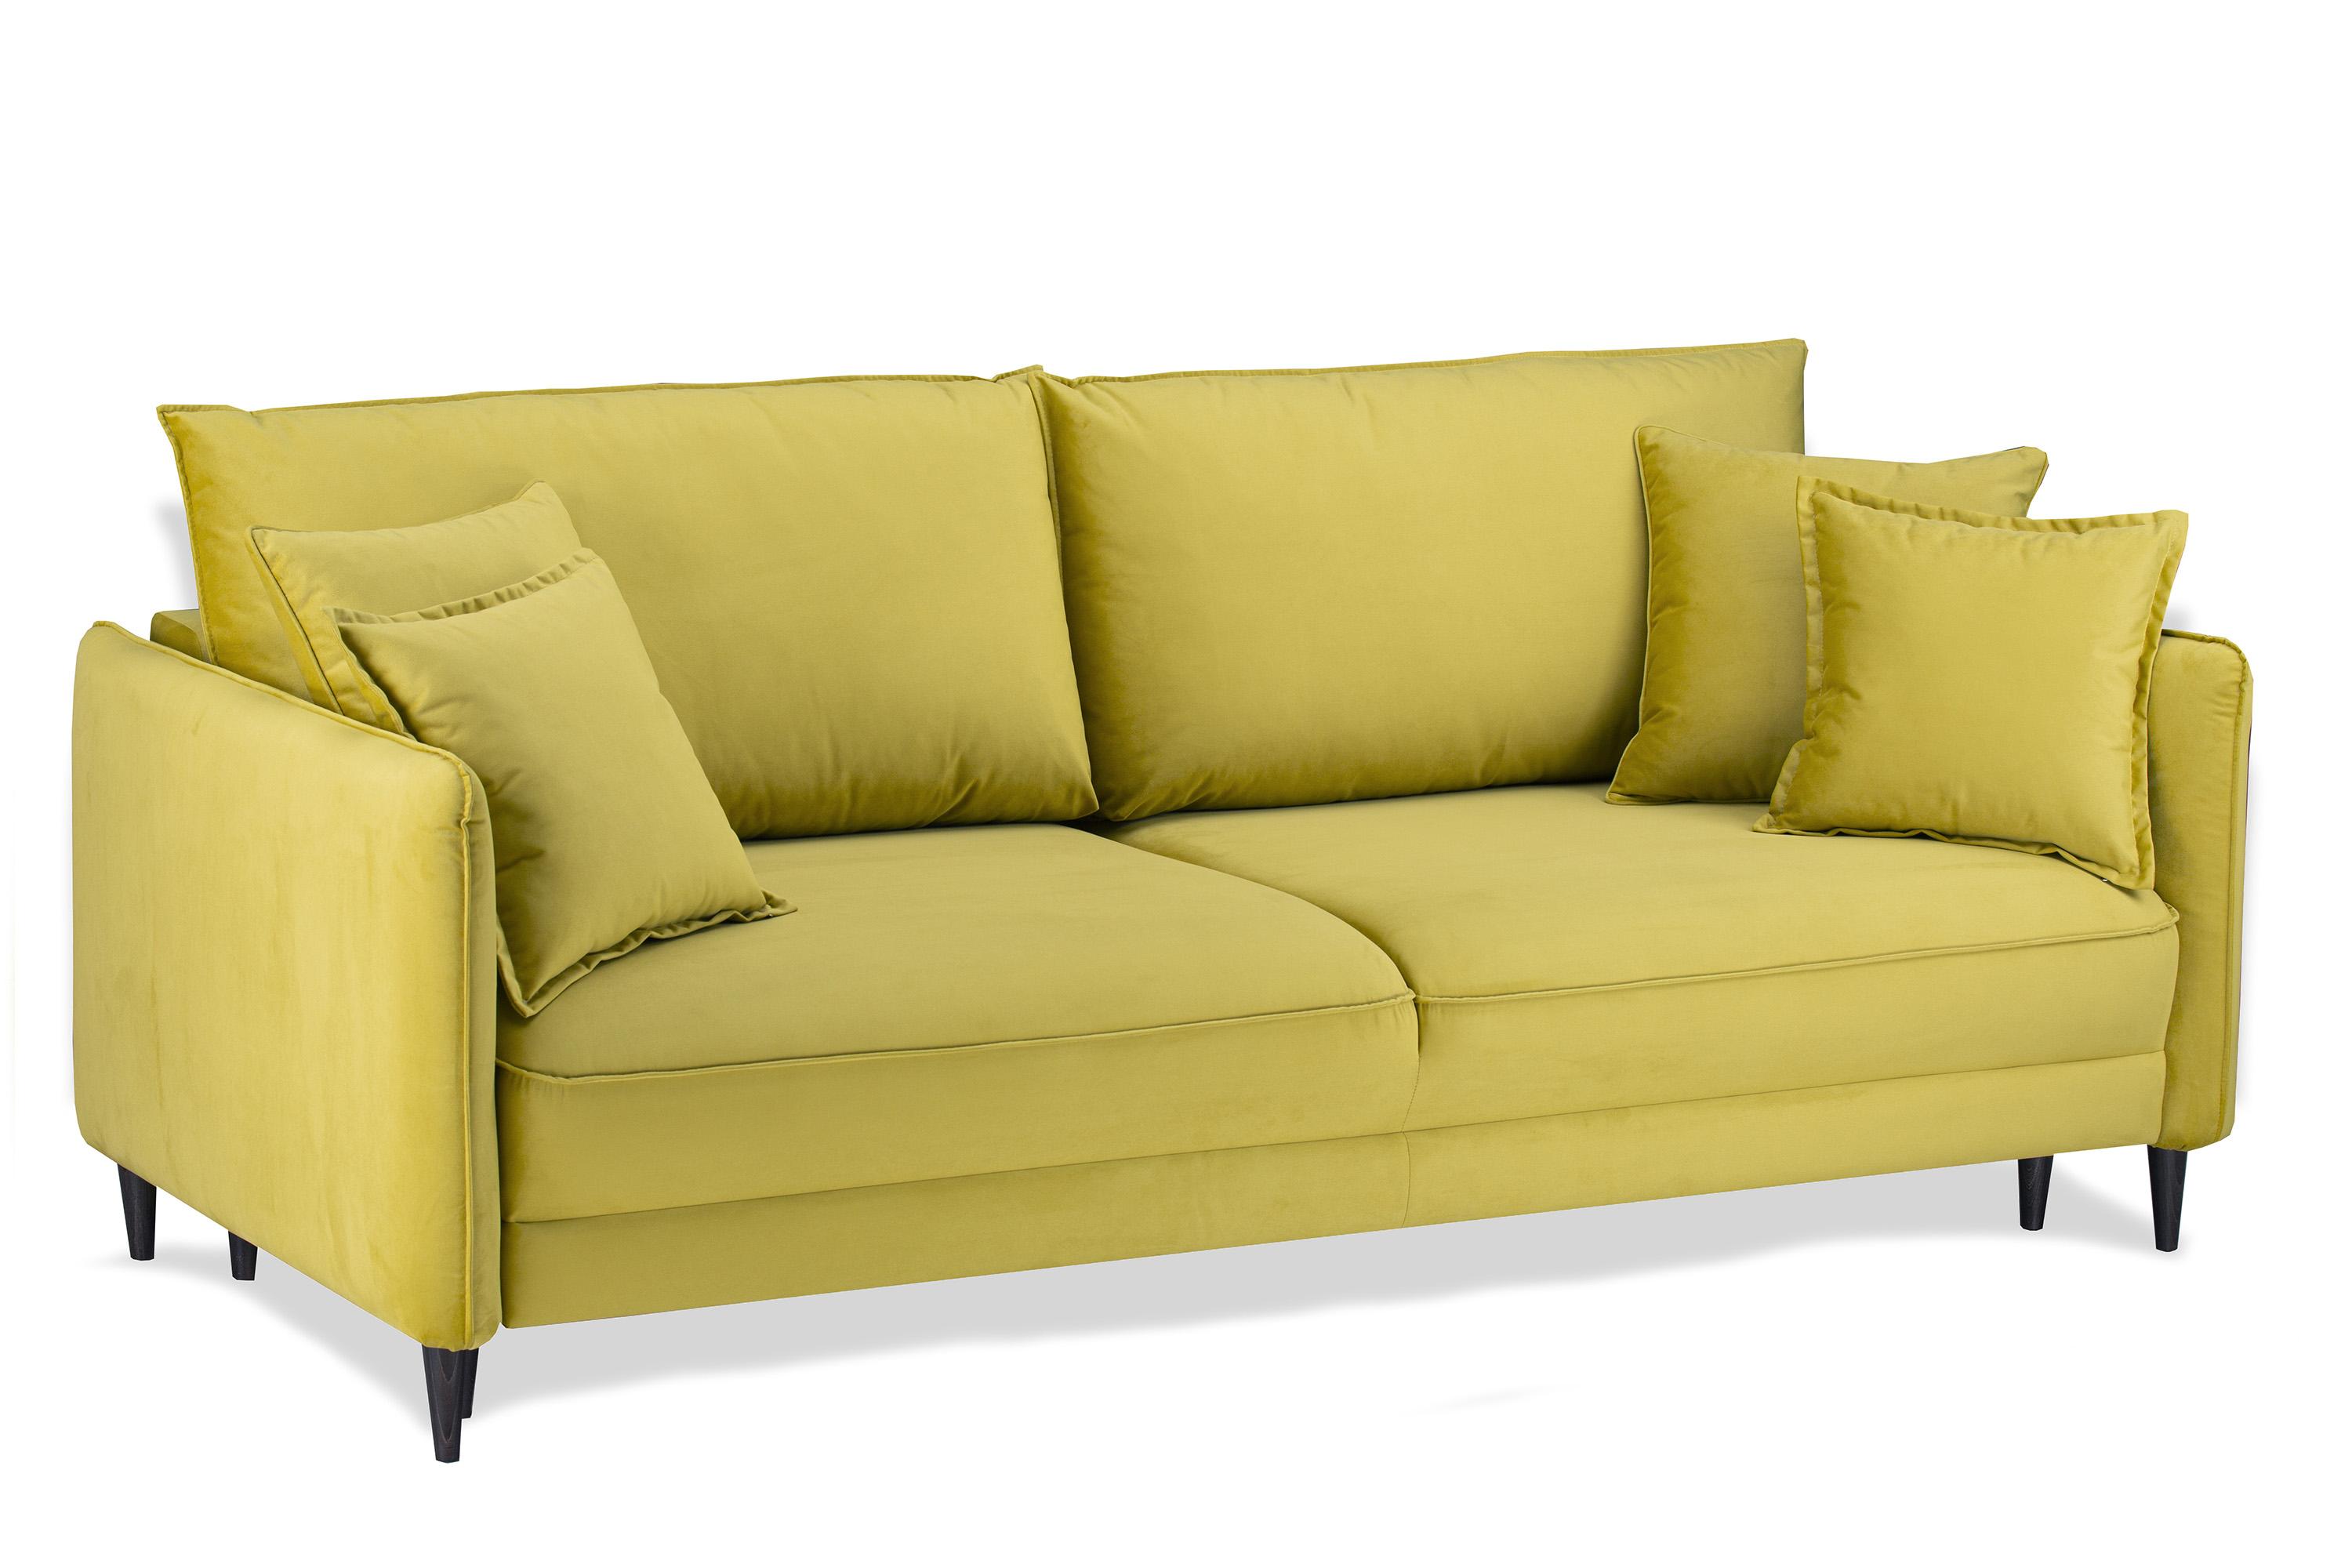 Фото №2 Йорк Премиум диван-кровать велюр Велутто цвет 28